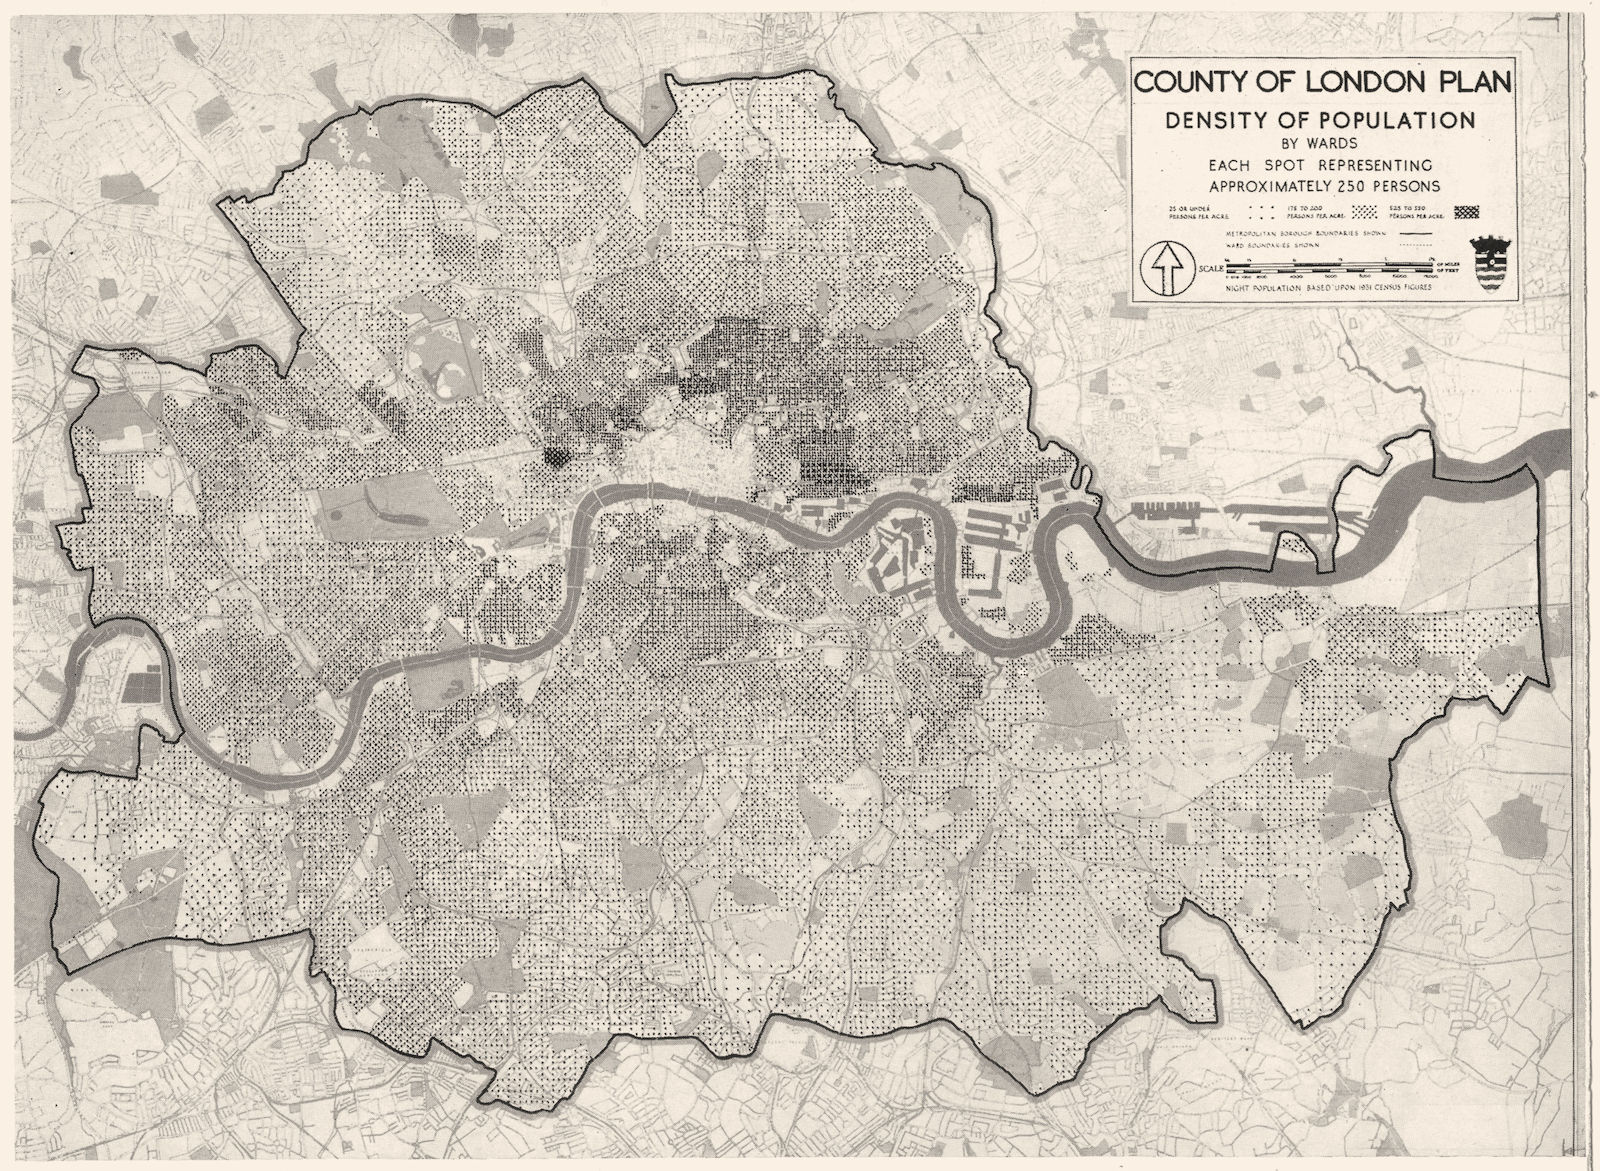 Associate Product LONDON. Survey of pre- war population densities 1943 old vintage map chart